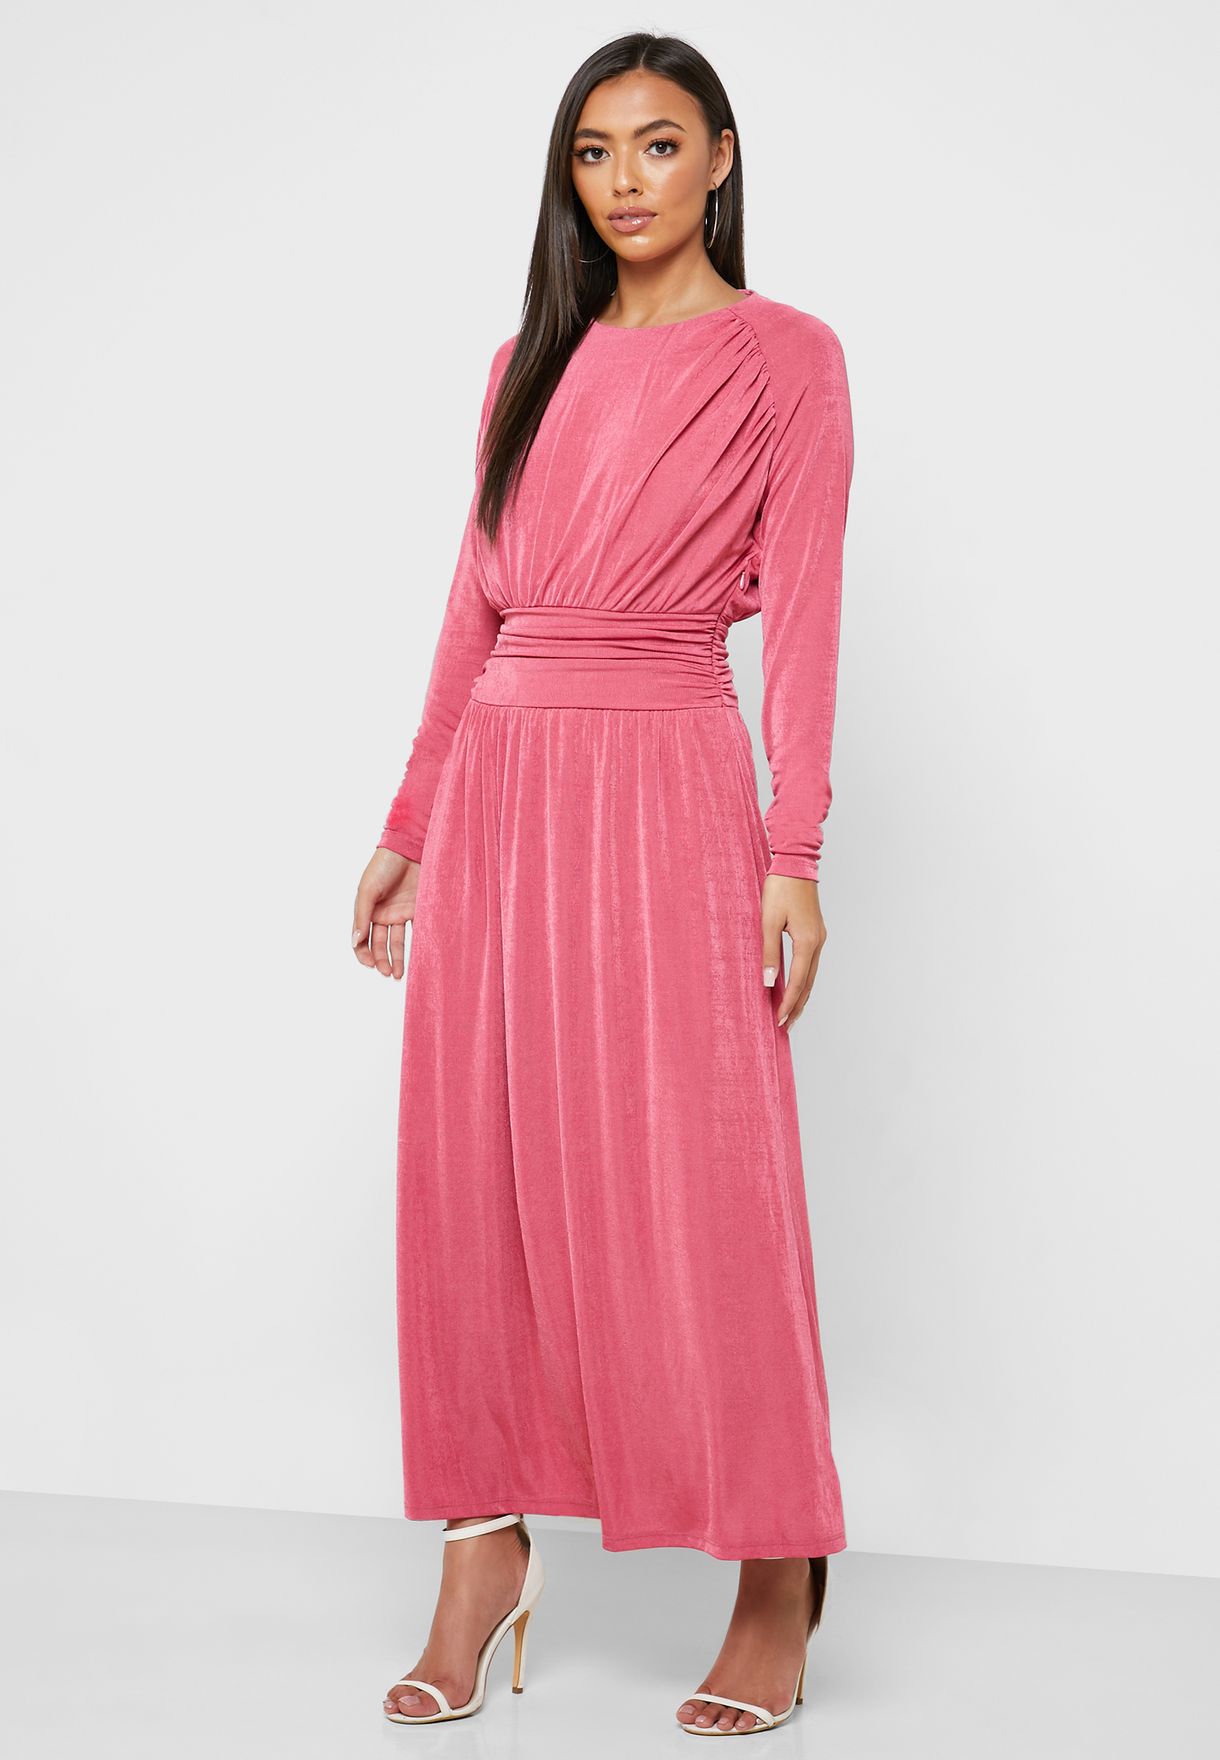 pink velour dress